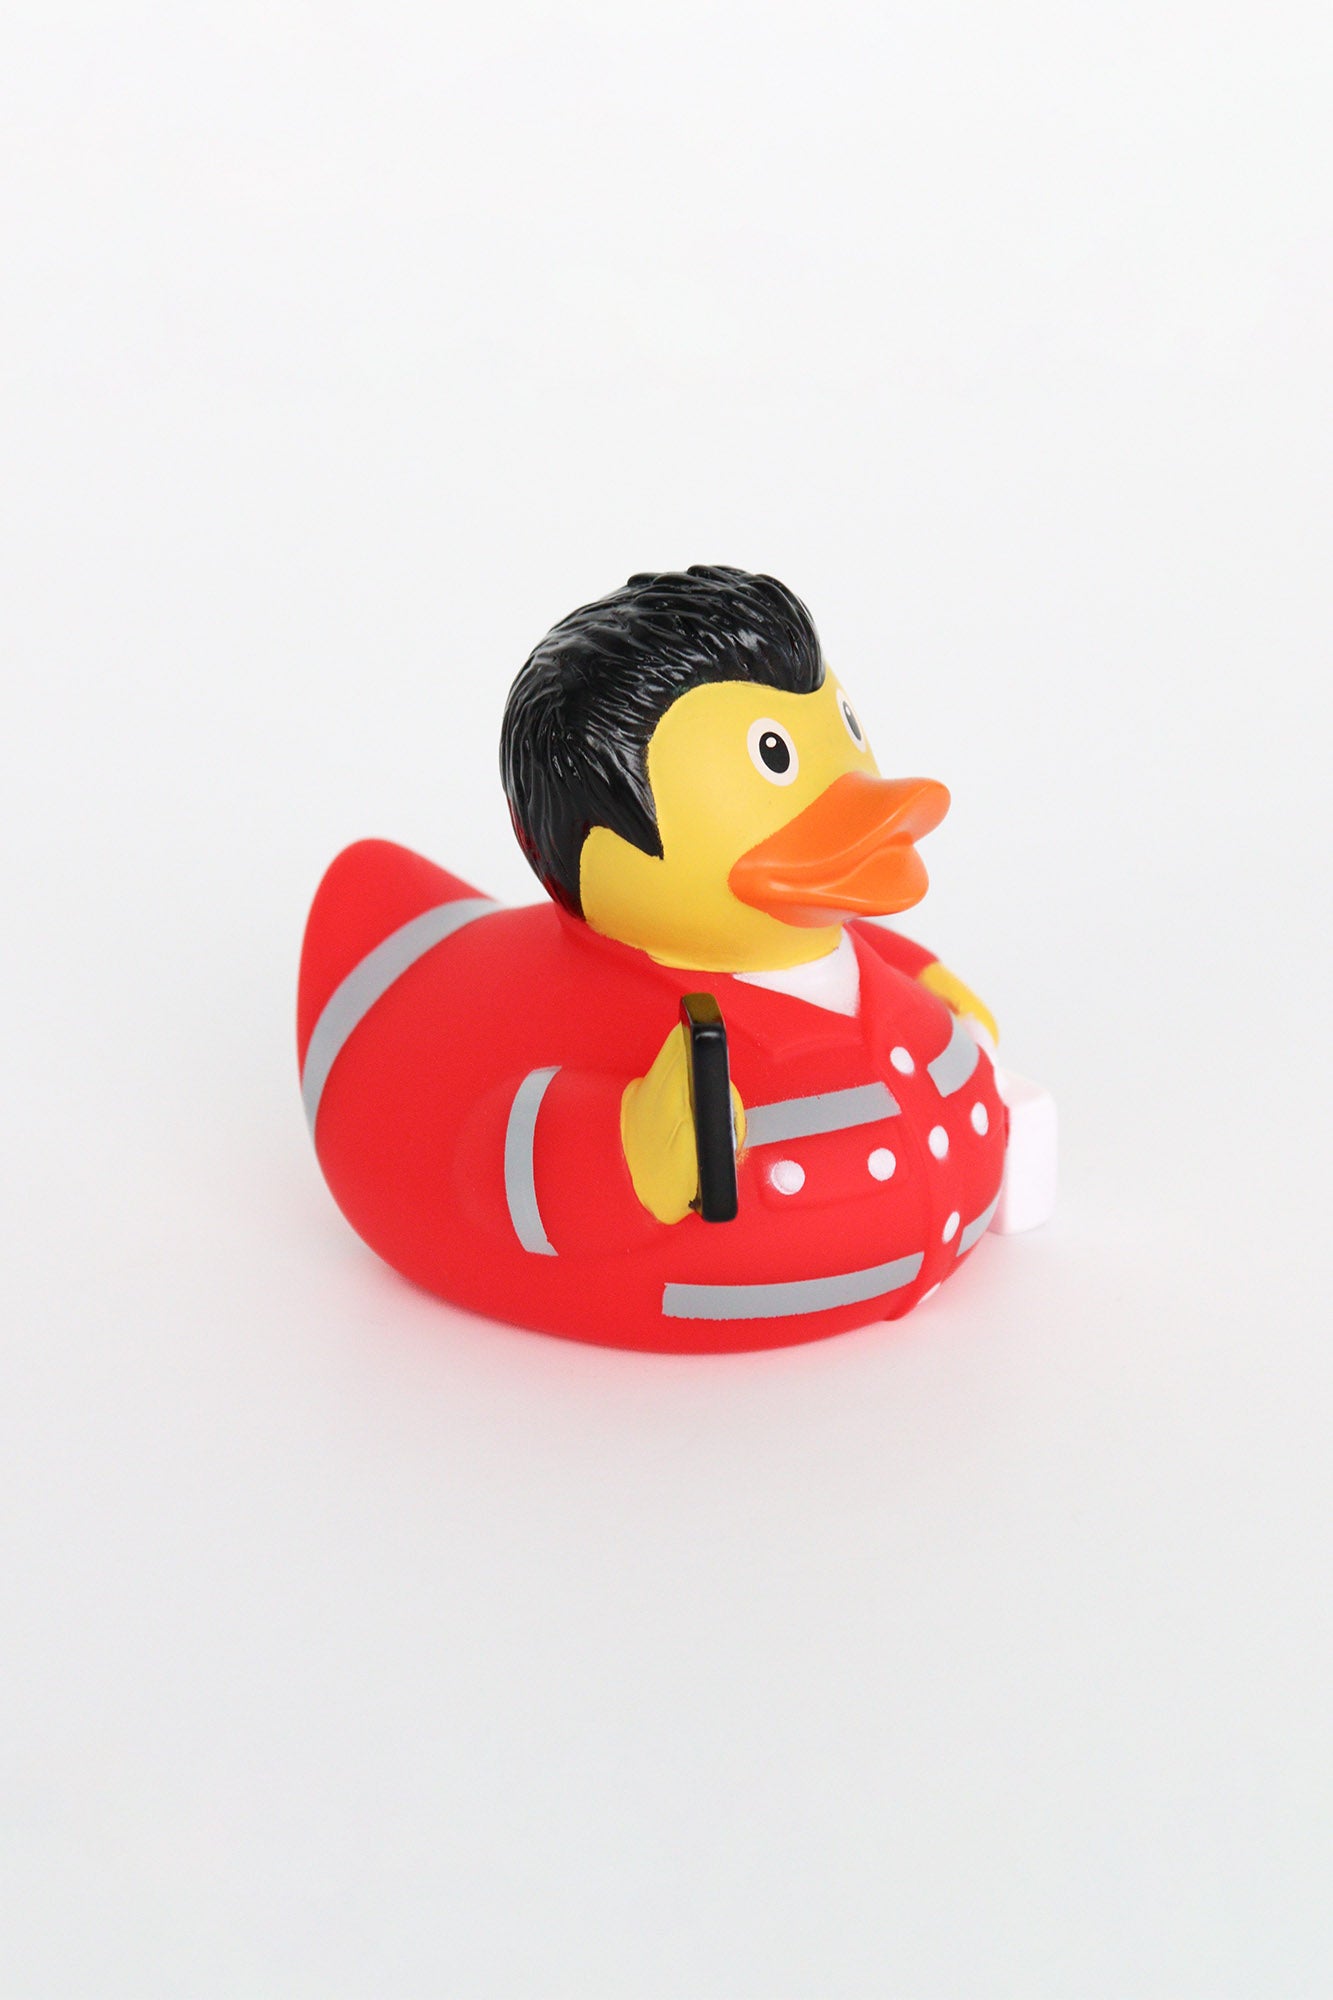 Paramedic emergency medicine plastic duck toy